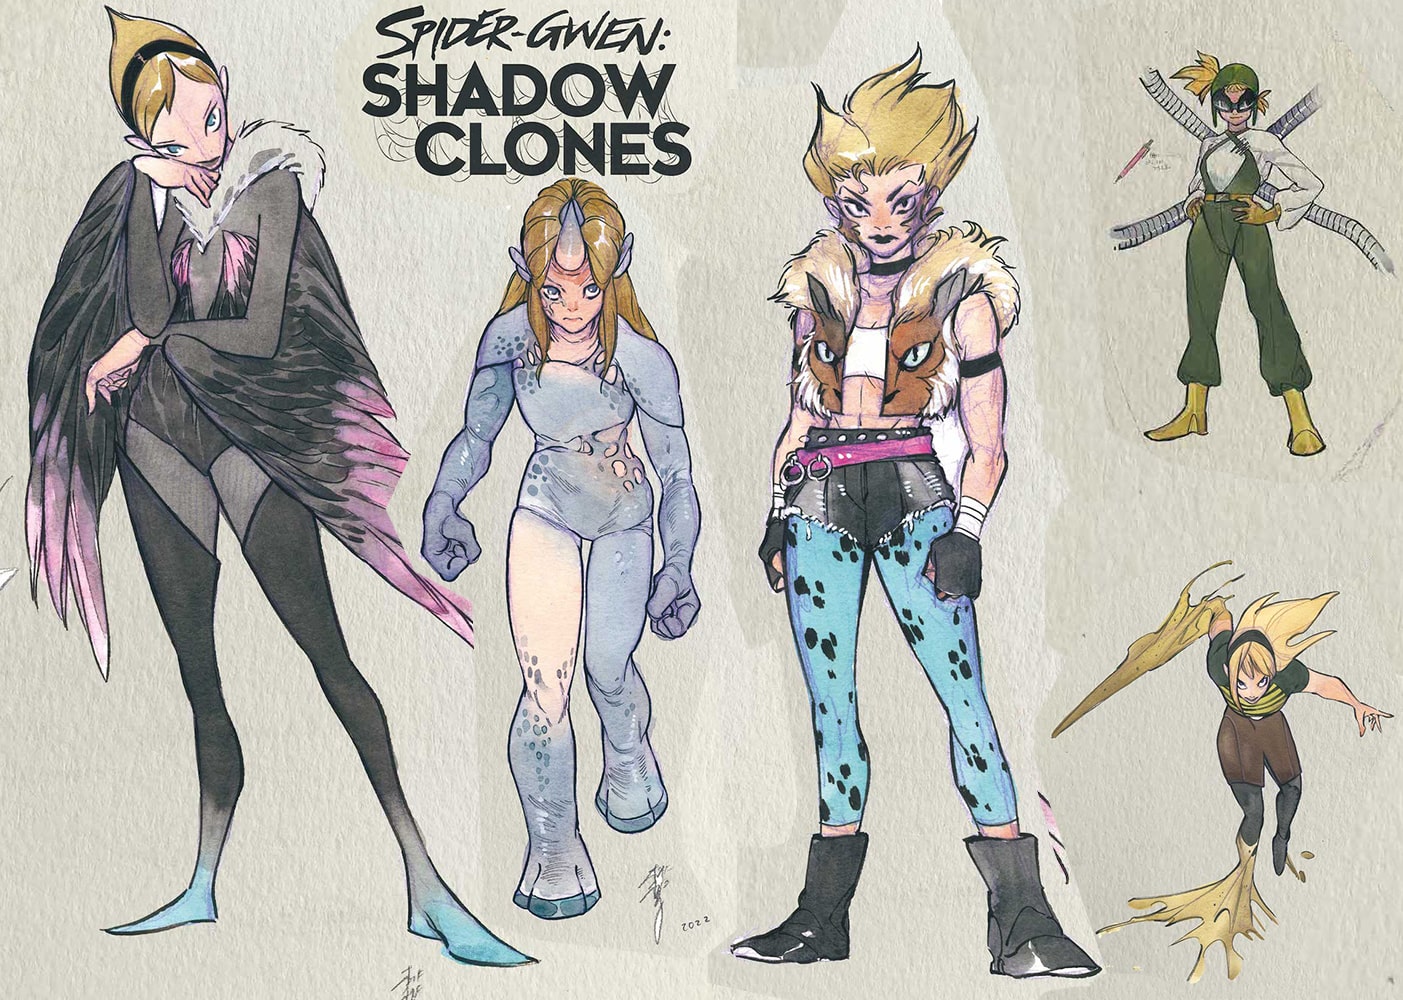 Check out Peach Momoko's 5 new Gwen Stacy villain designs